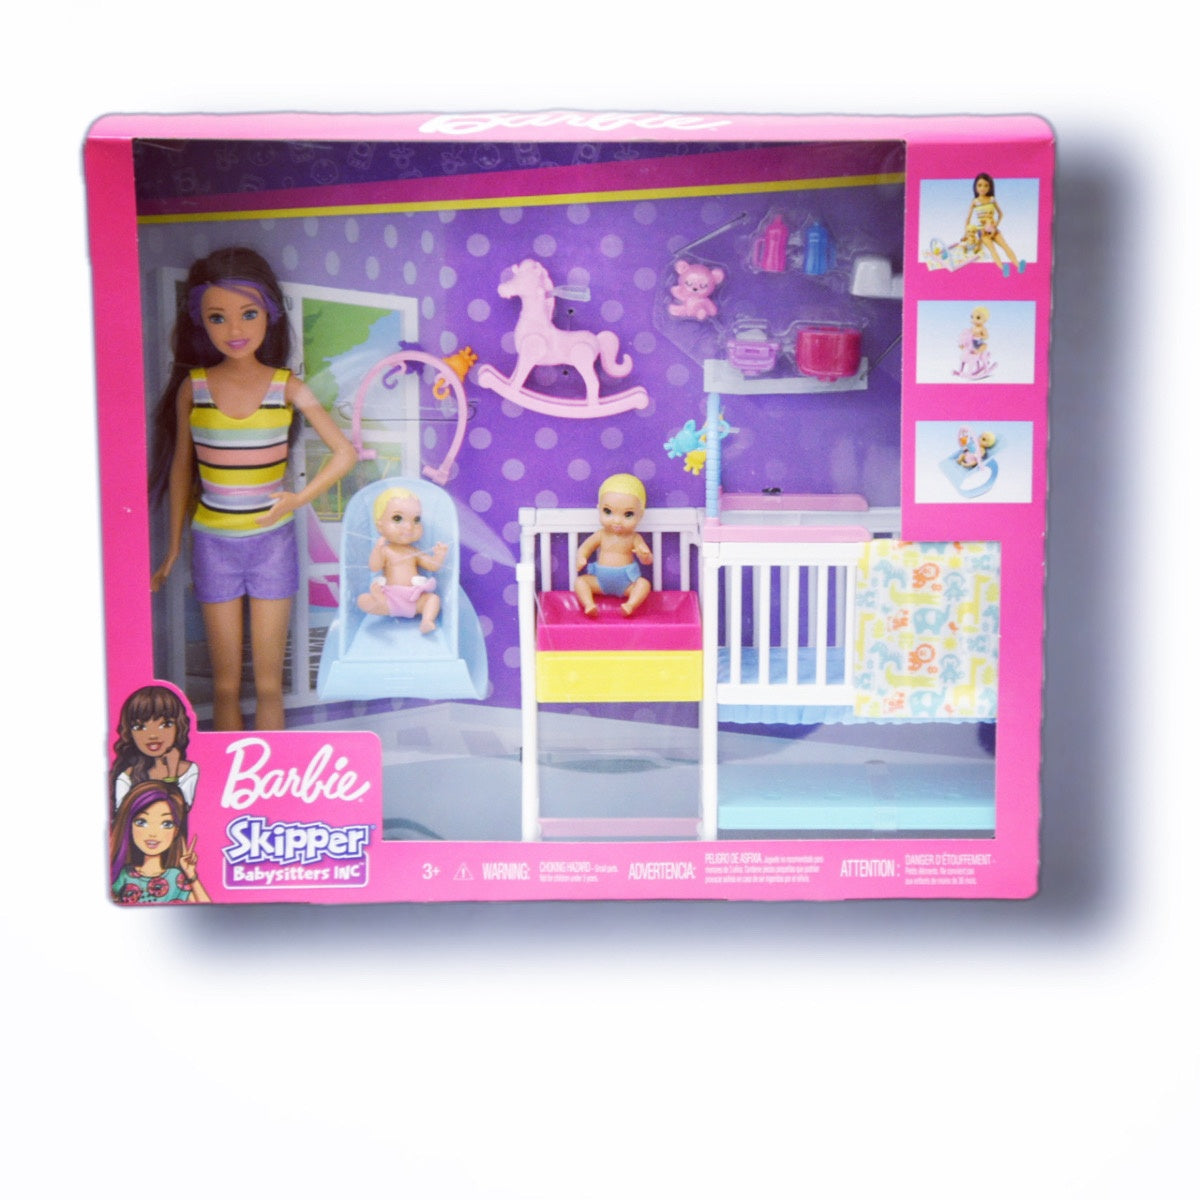 Barbie Skipper Babysitter Inc